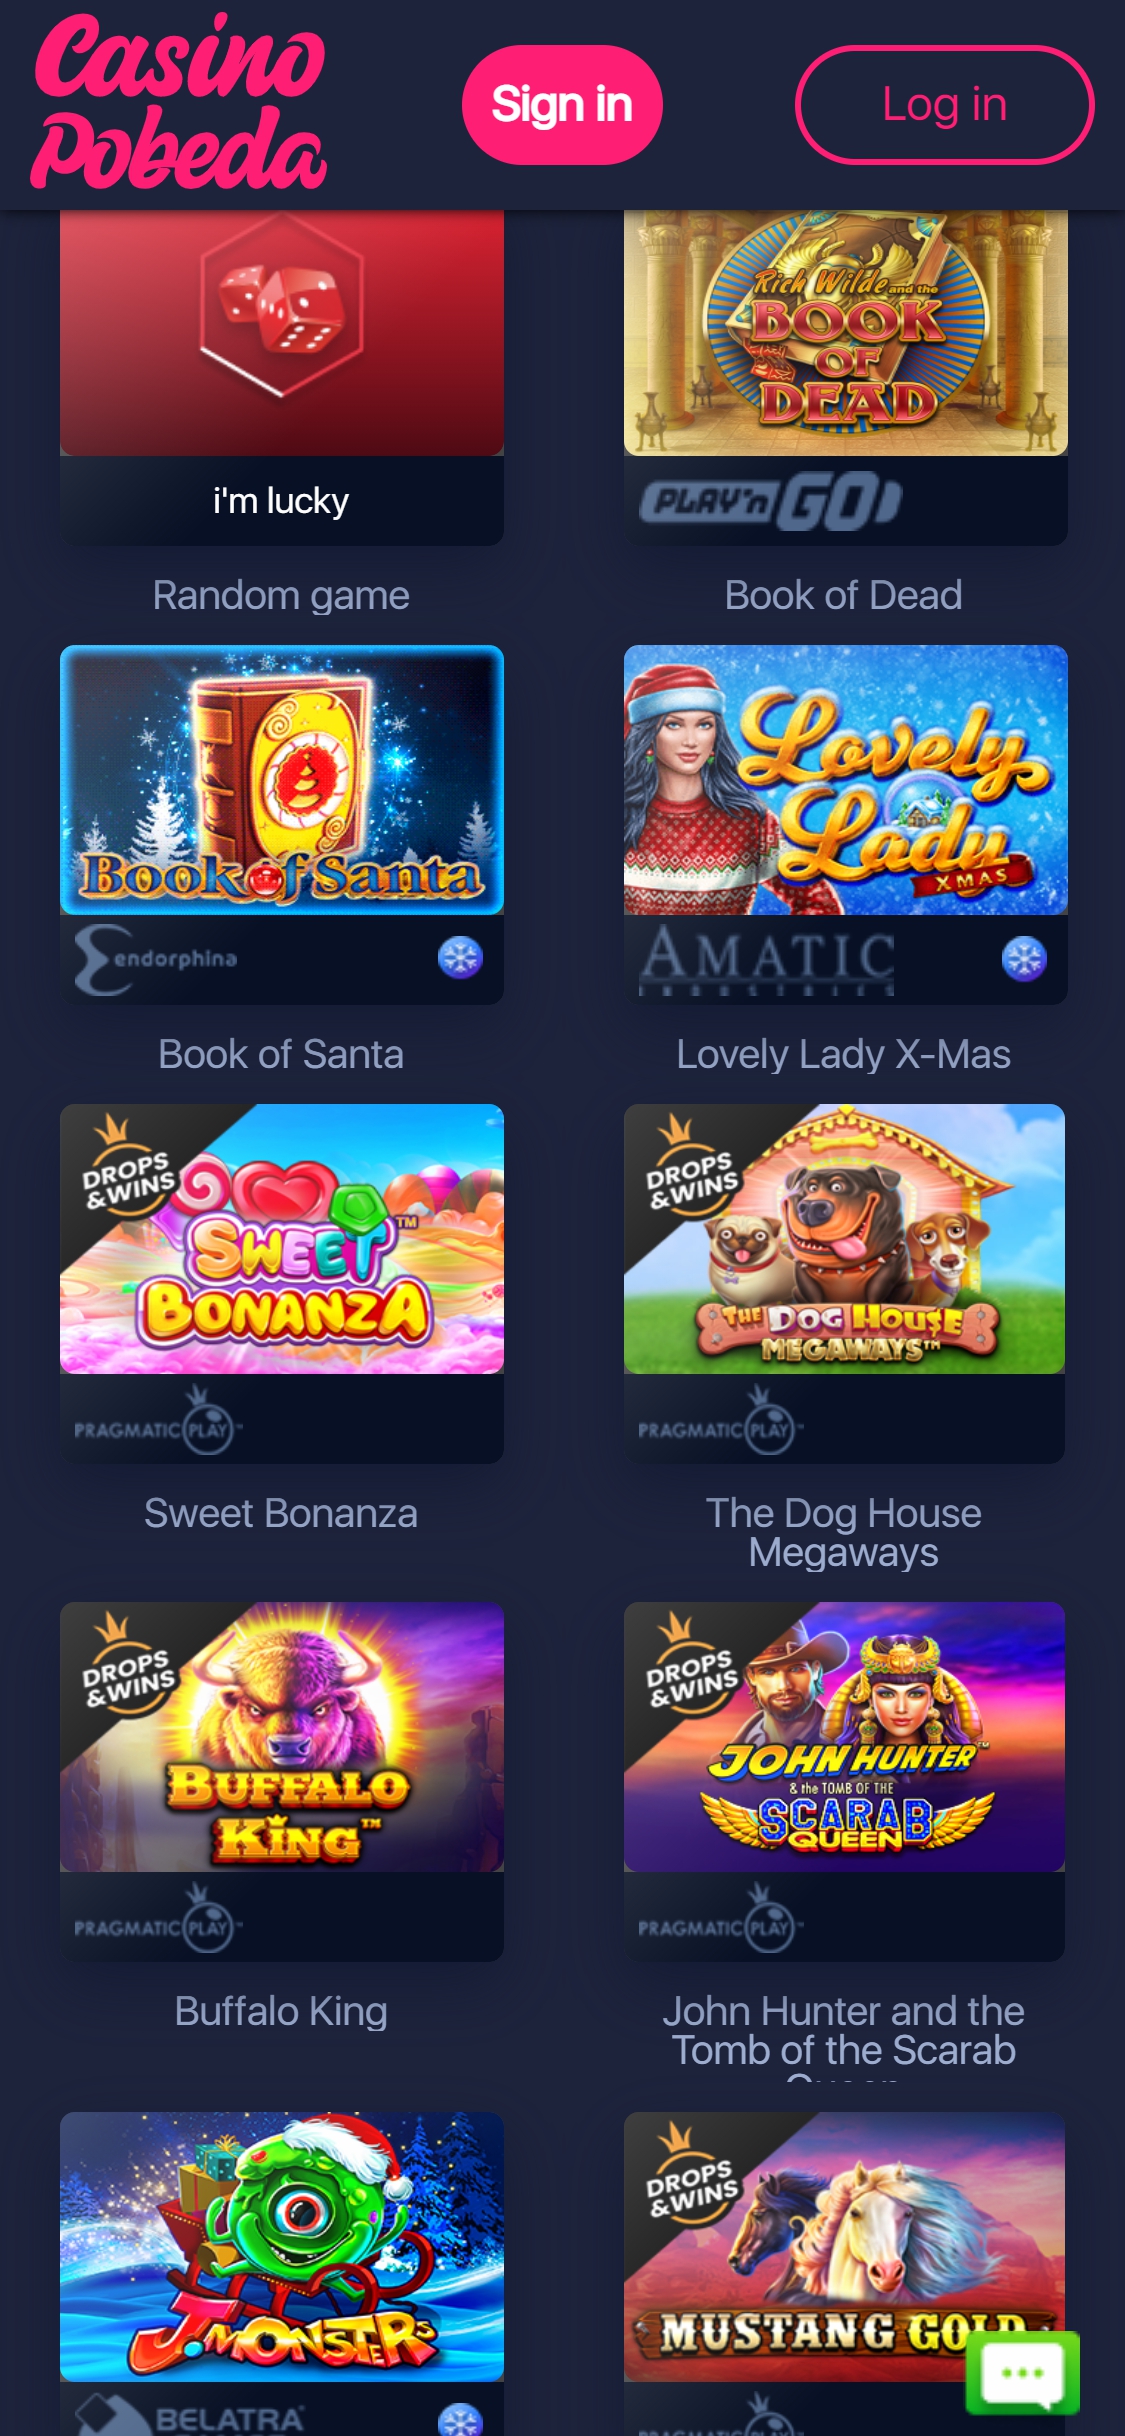 Casino Pobeda Mobile Games Review